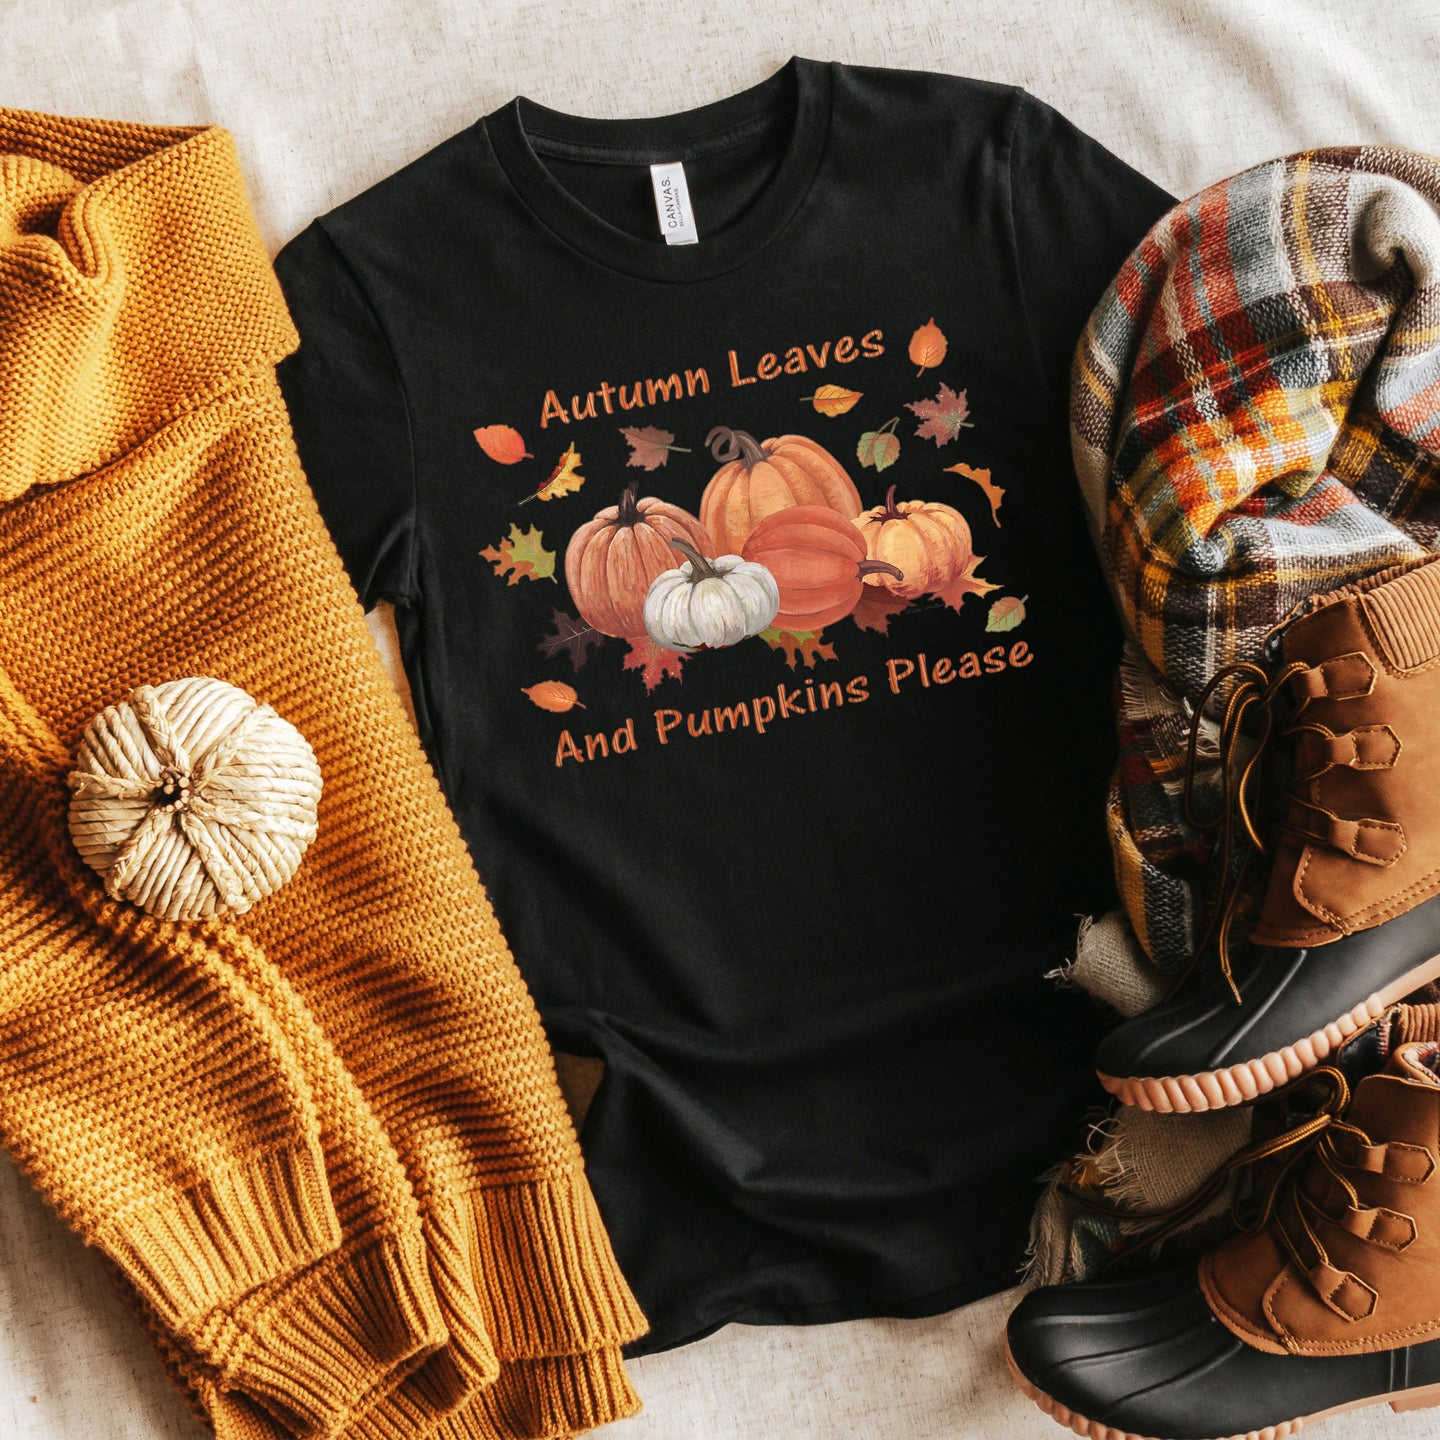 Pumpkins Please T-shirt, Autumn Tee